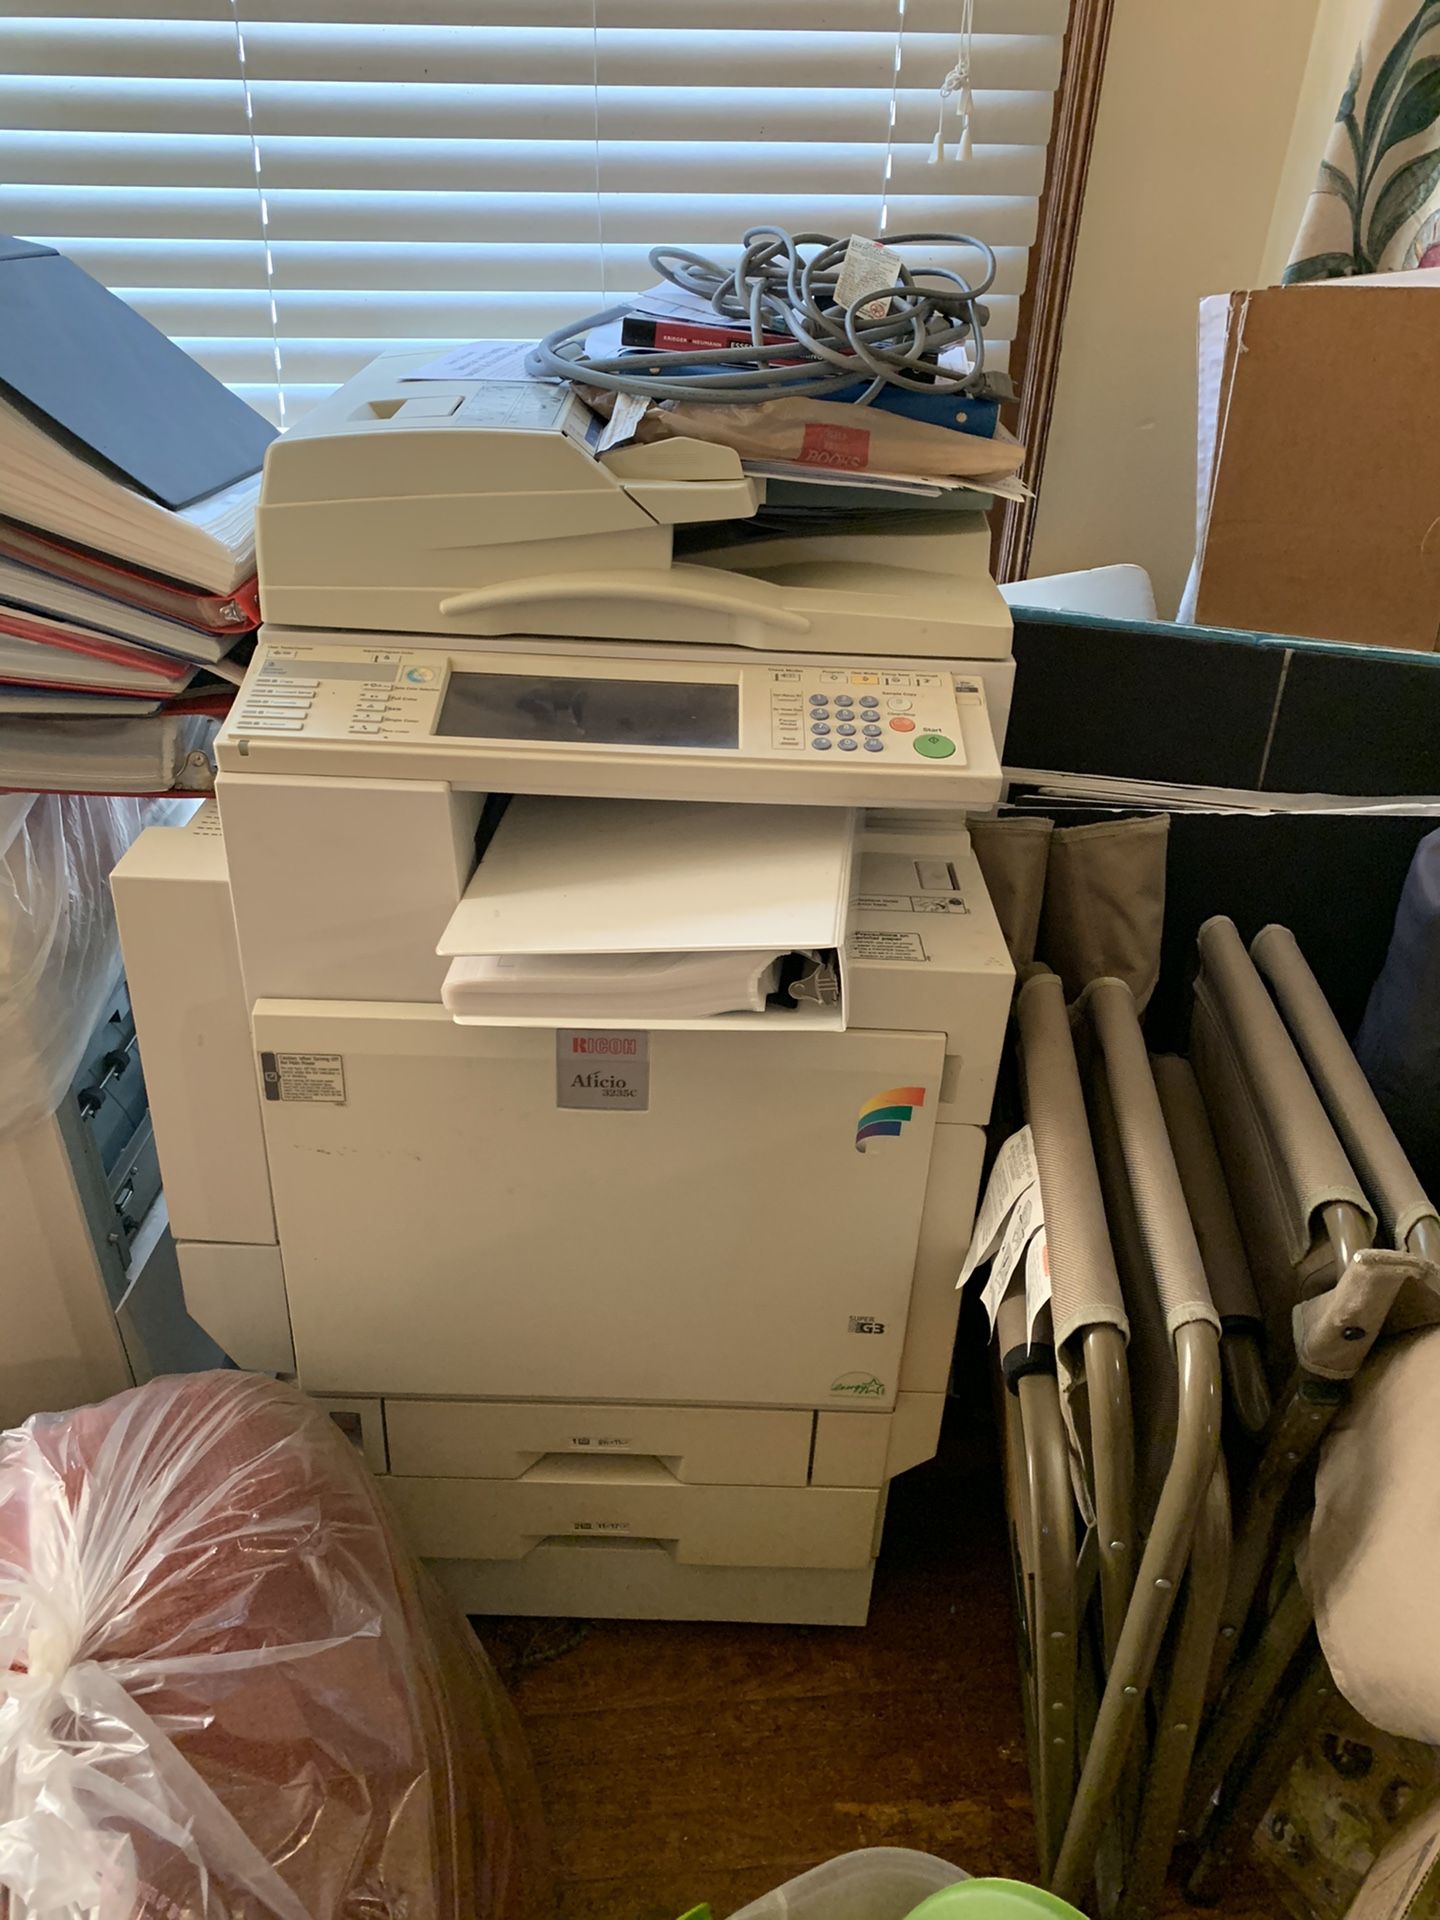 Printer big boy